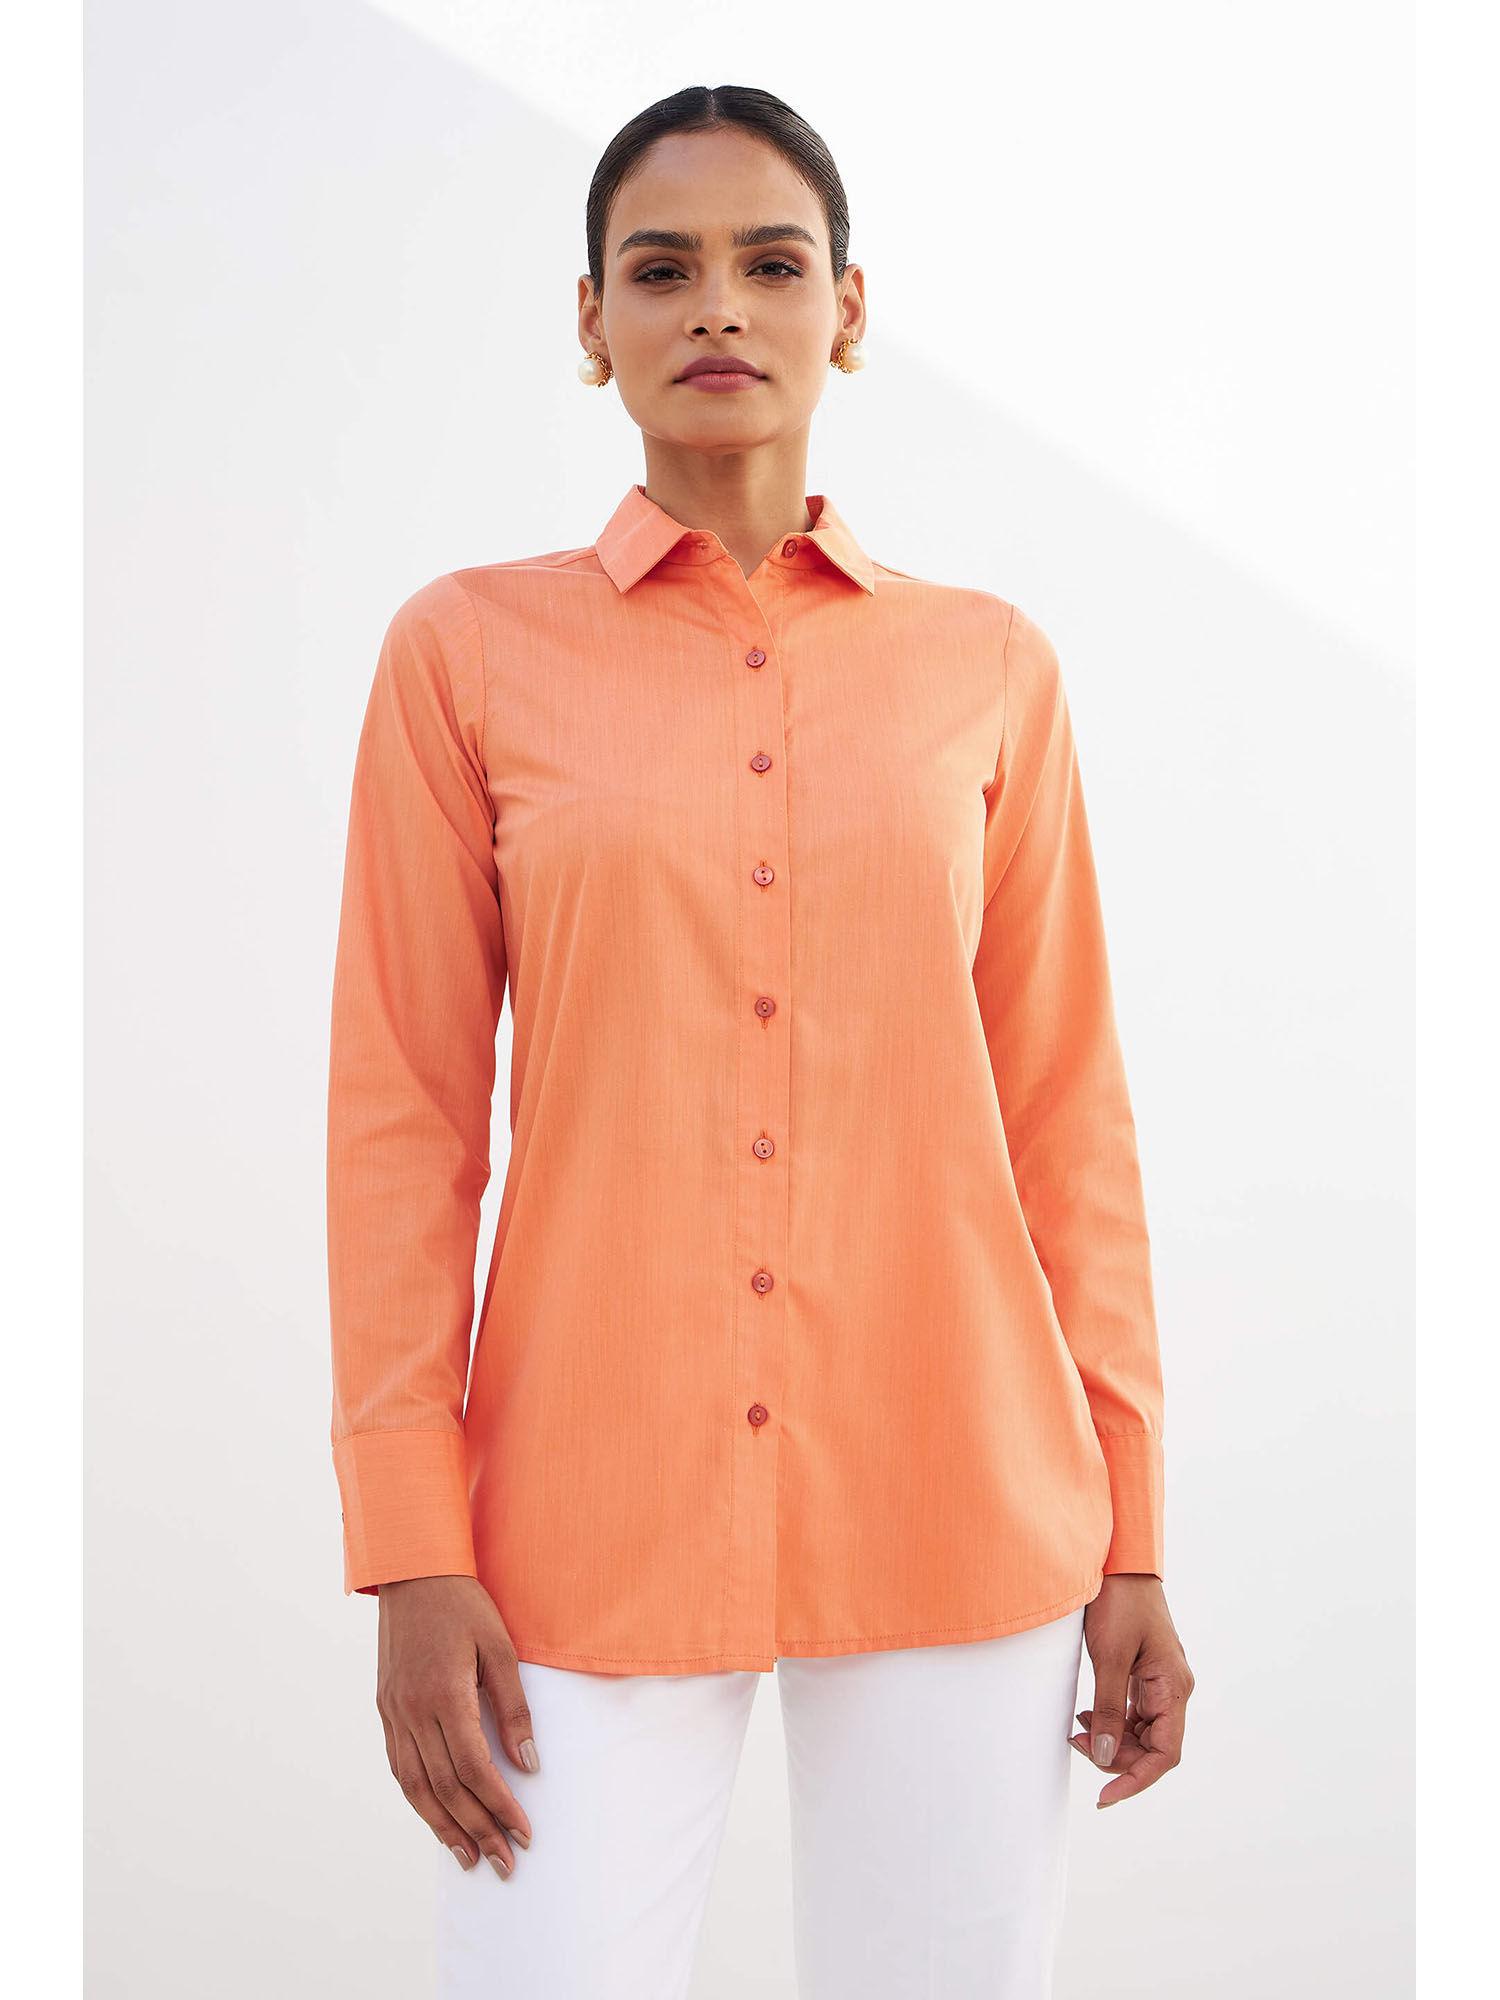 orange button down shirt